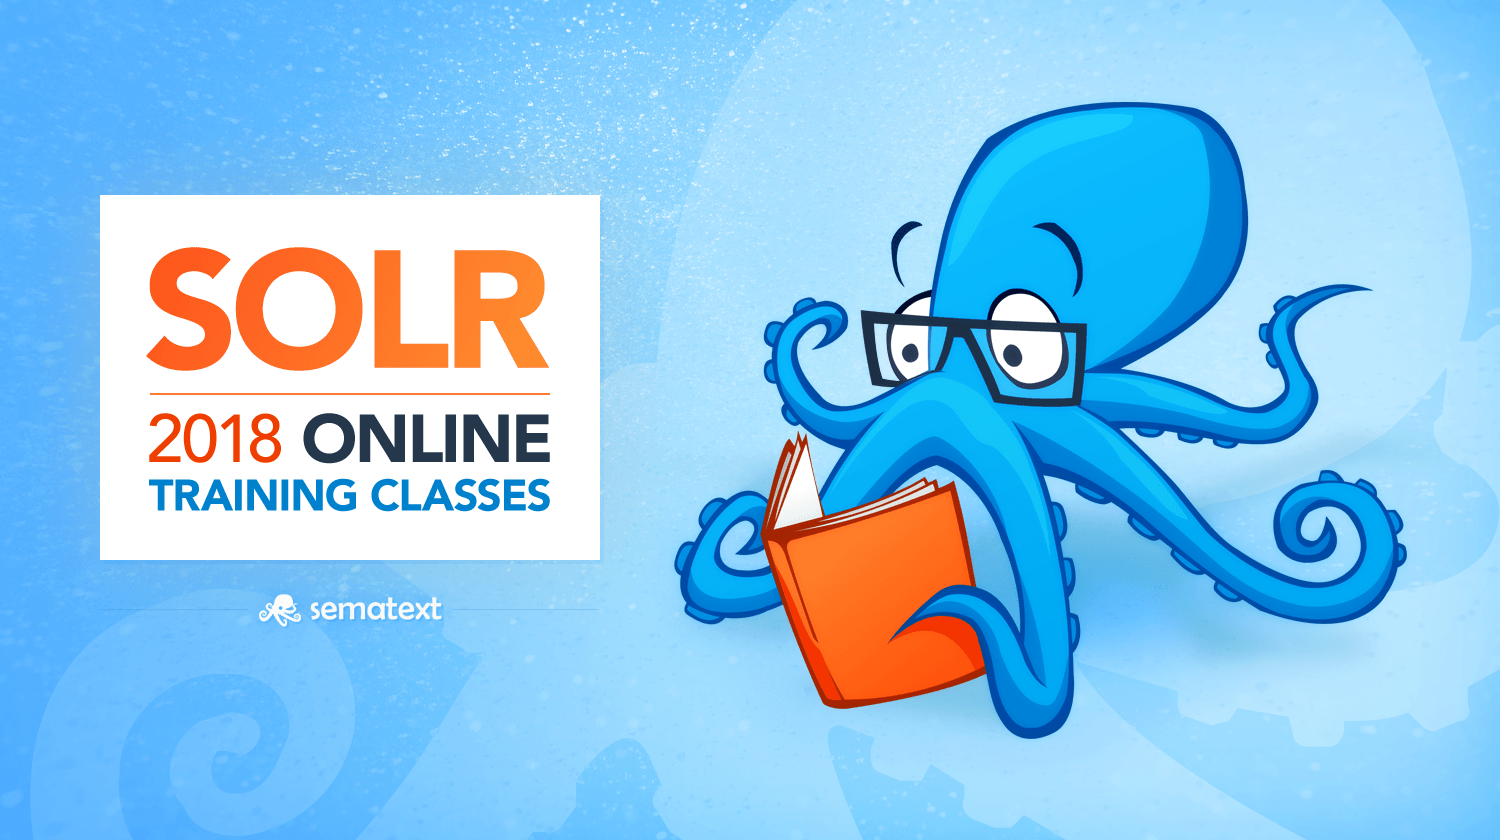 Solr online training classes in 2018